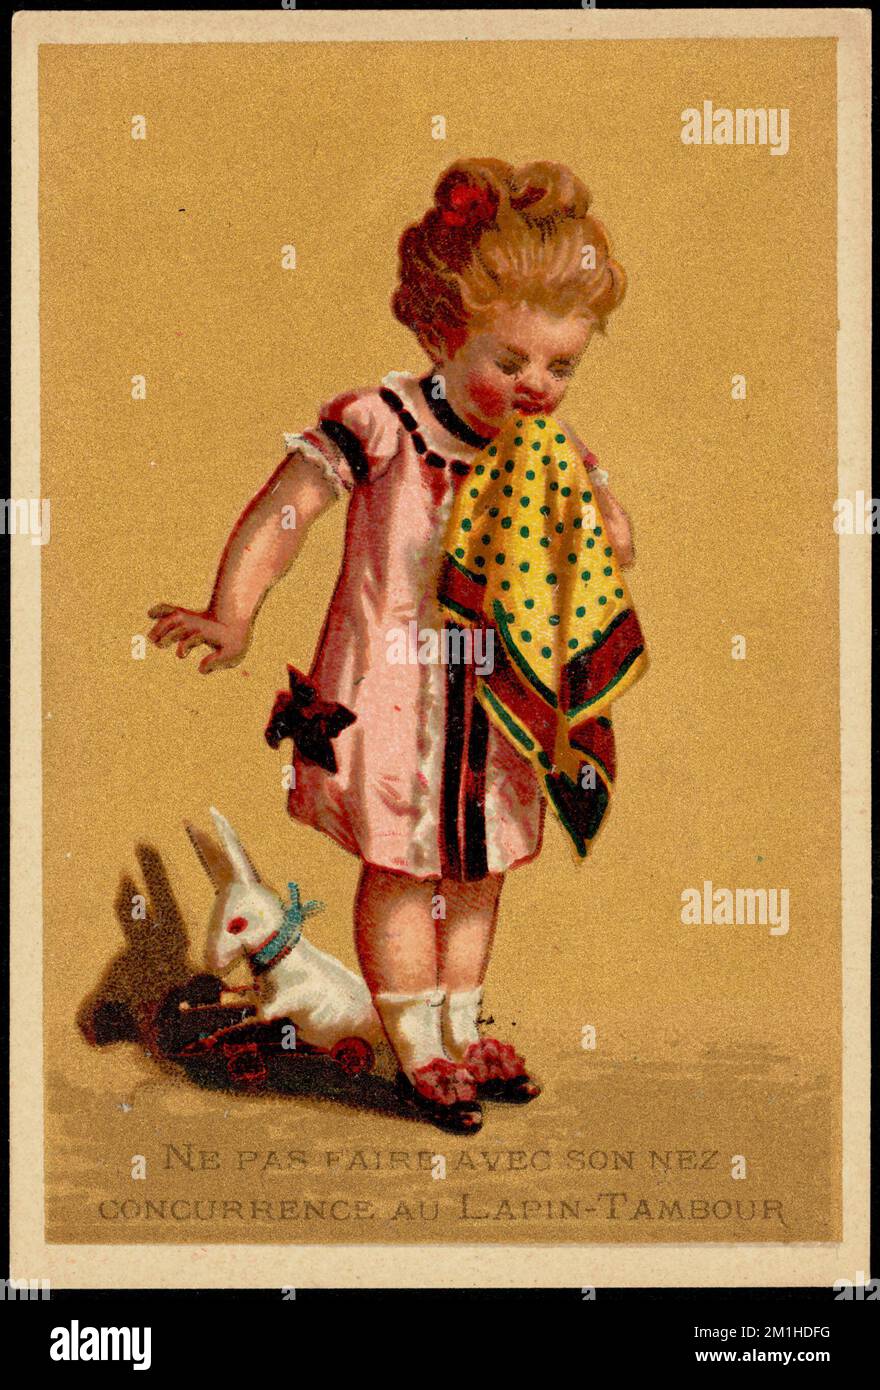 Ne pas faire avec son nez concurrence au Lapin-Tambour , Girls, Handkerchiefs, Rabbits, 19th Century American Trade Cards Stock Photo